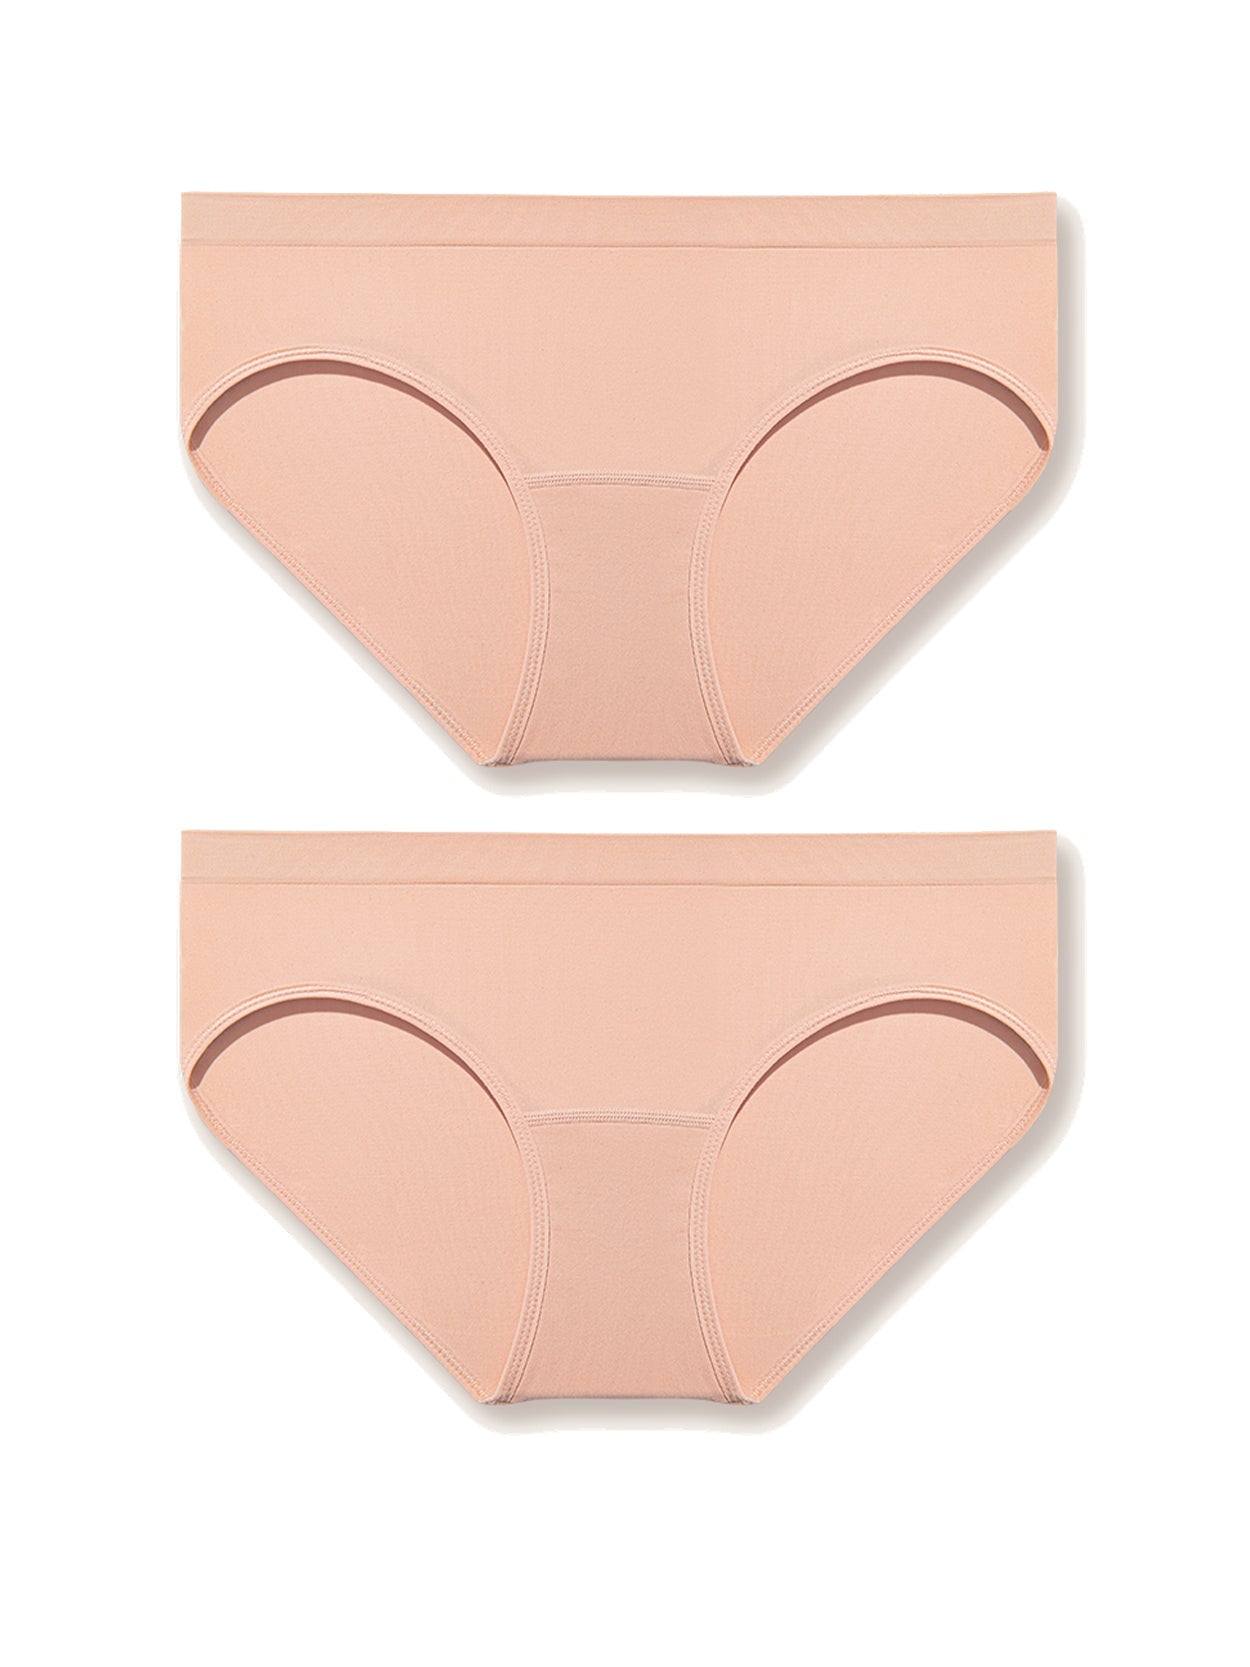 Seamless Panties Stretch Soft Underwear 2PCS Pink